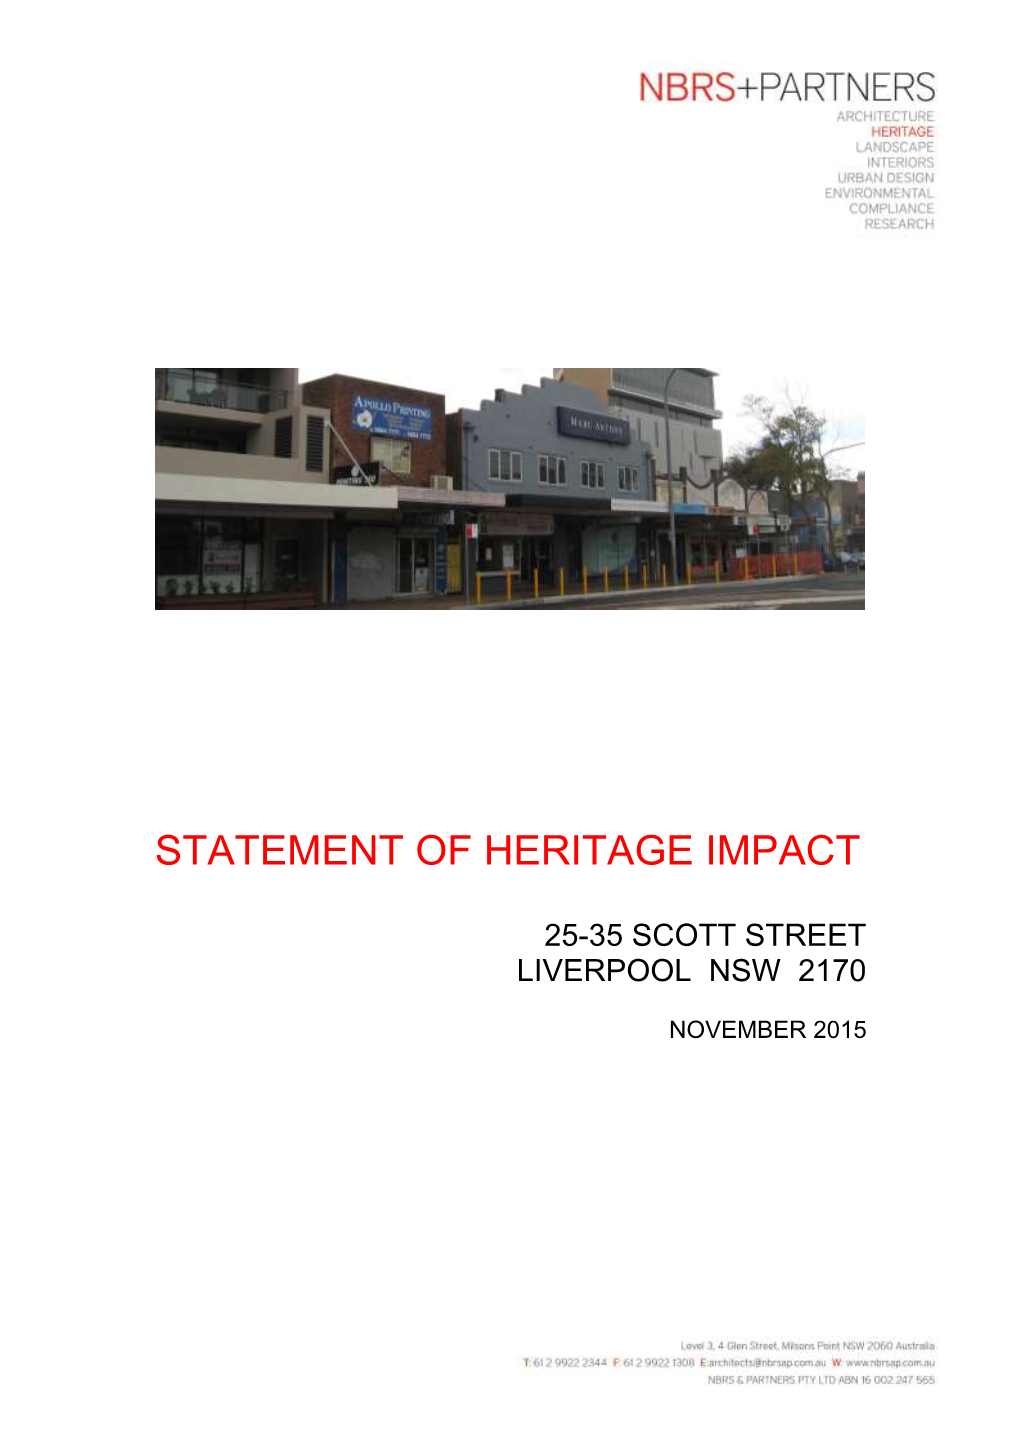 Statement of Heritage Impact